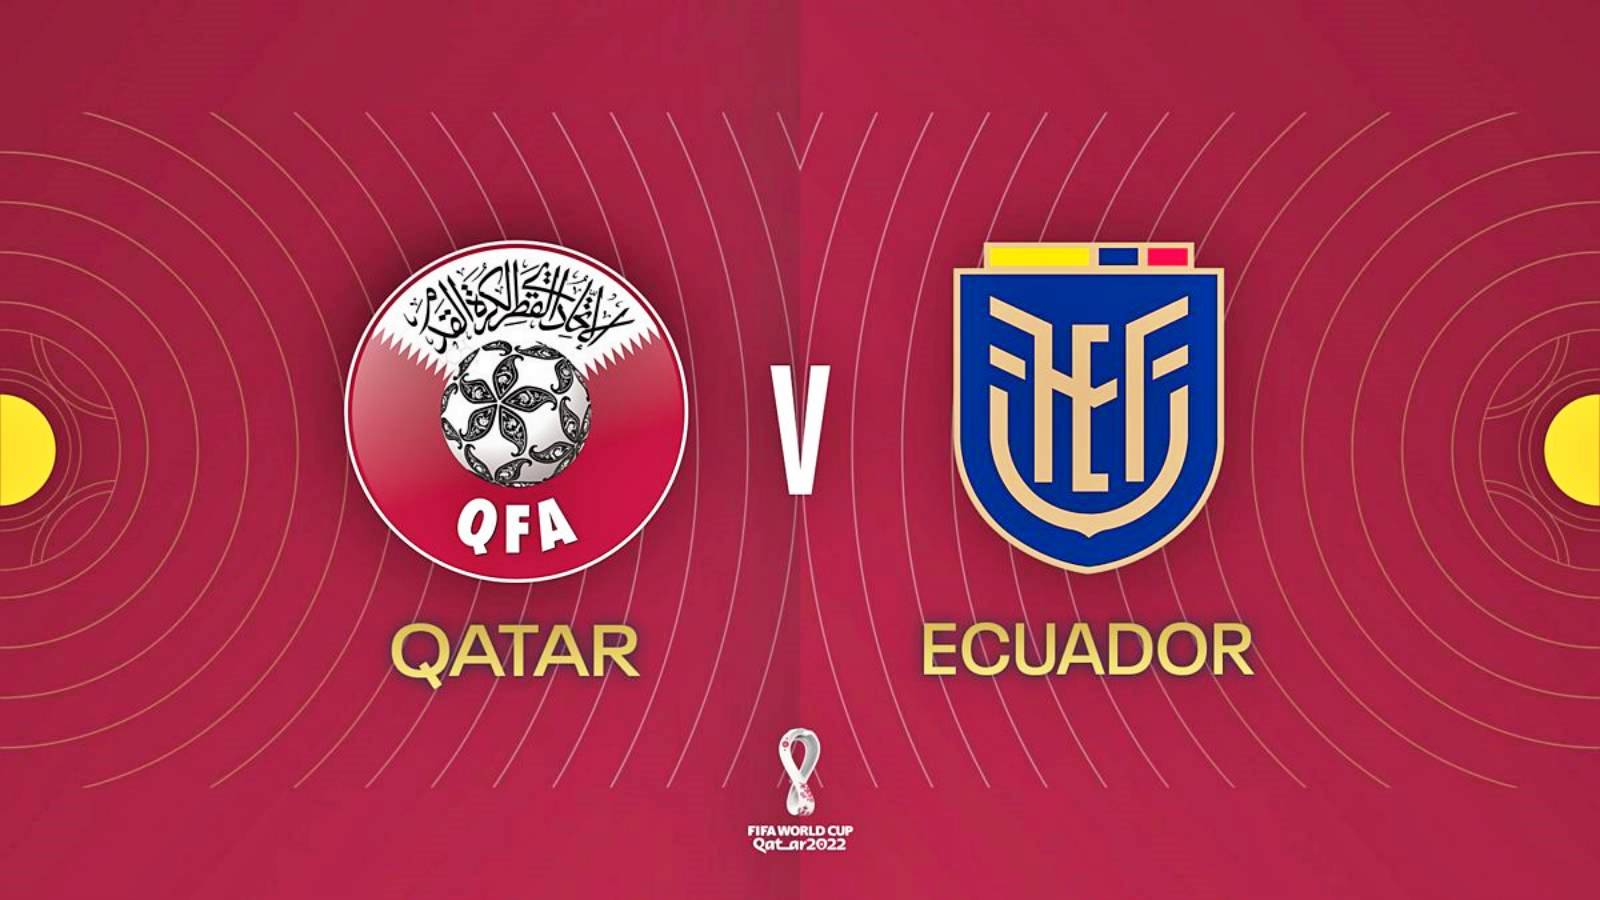 QATAR – ECUADOR LIVE TVR 1 Match Wereldkampioenschap 2022